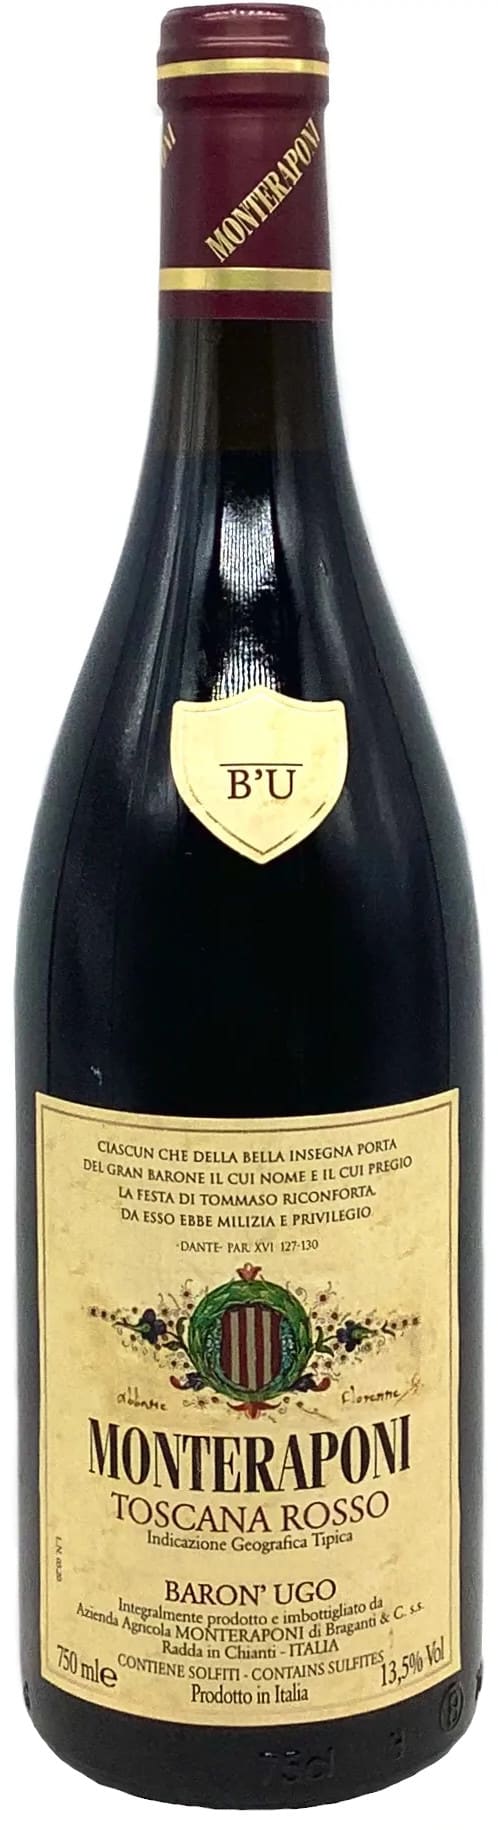 Monteraponi - Toscano Rosso Baron' Ugo 2018 (750)